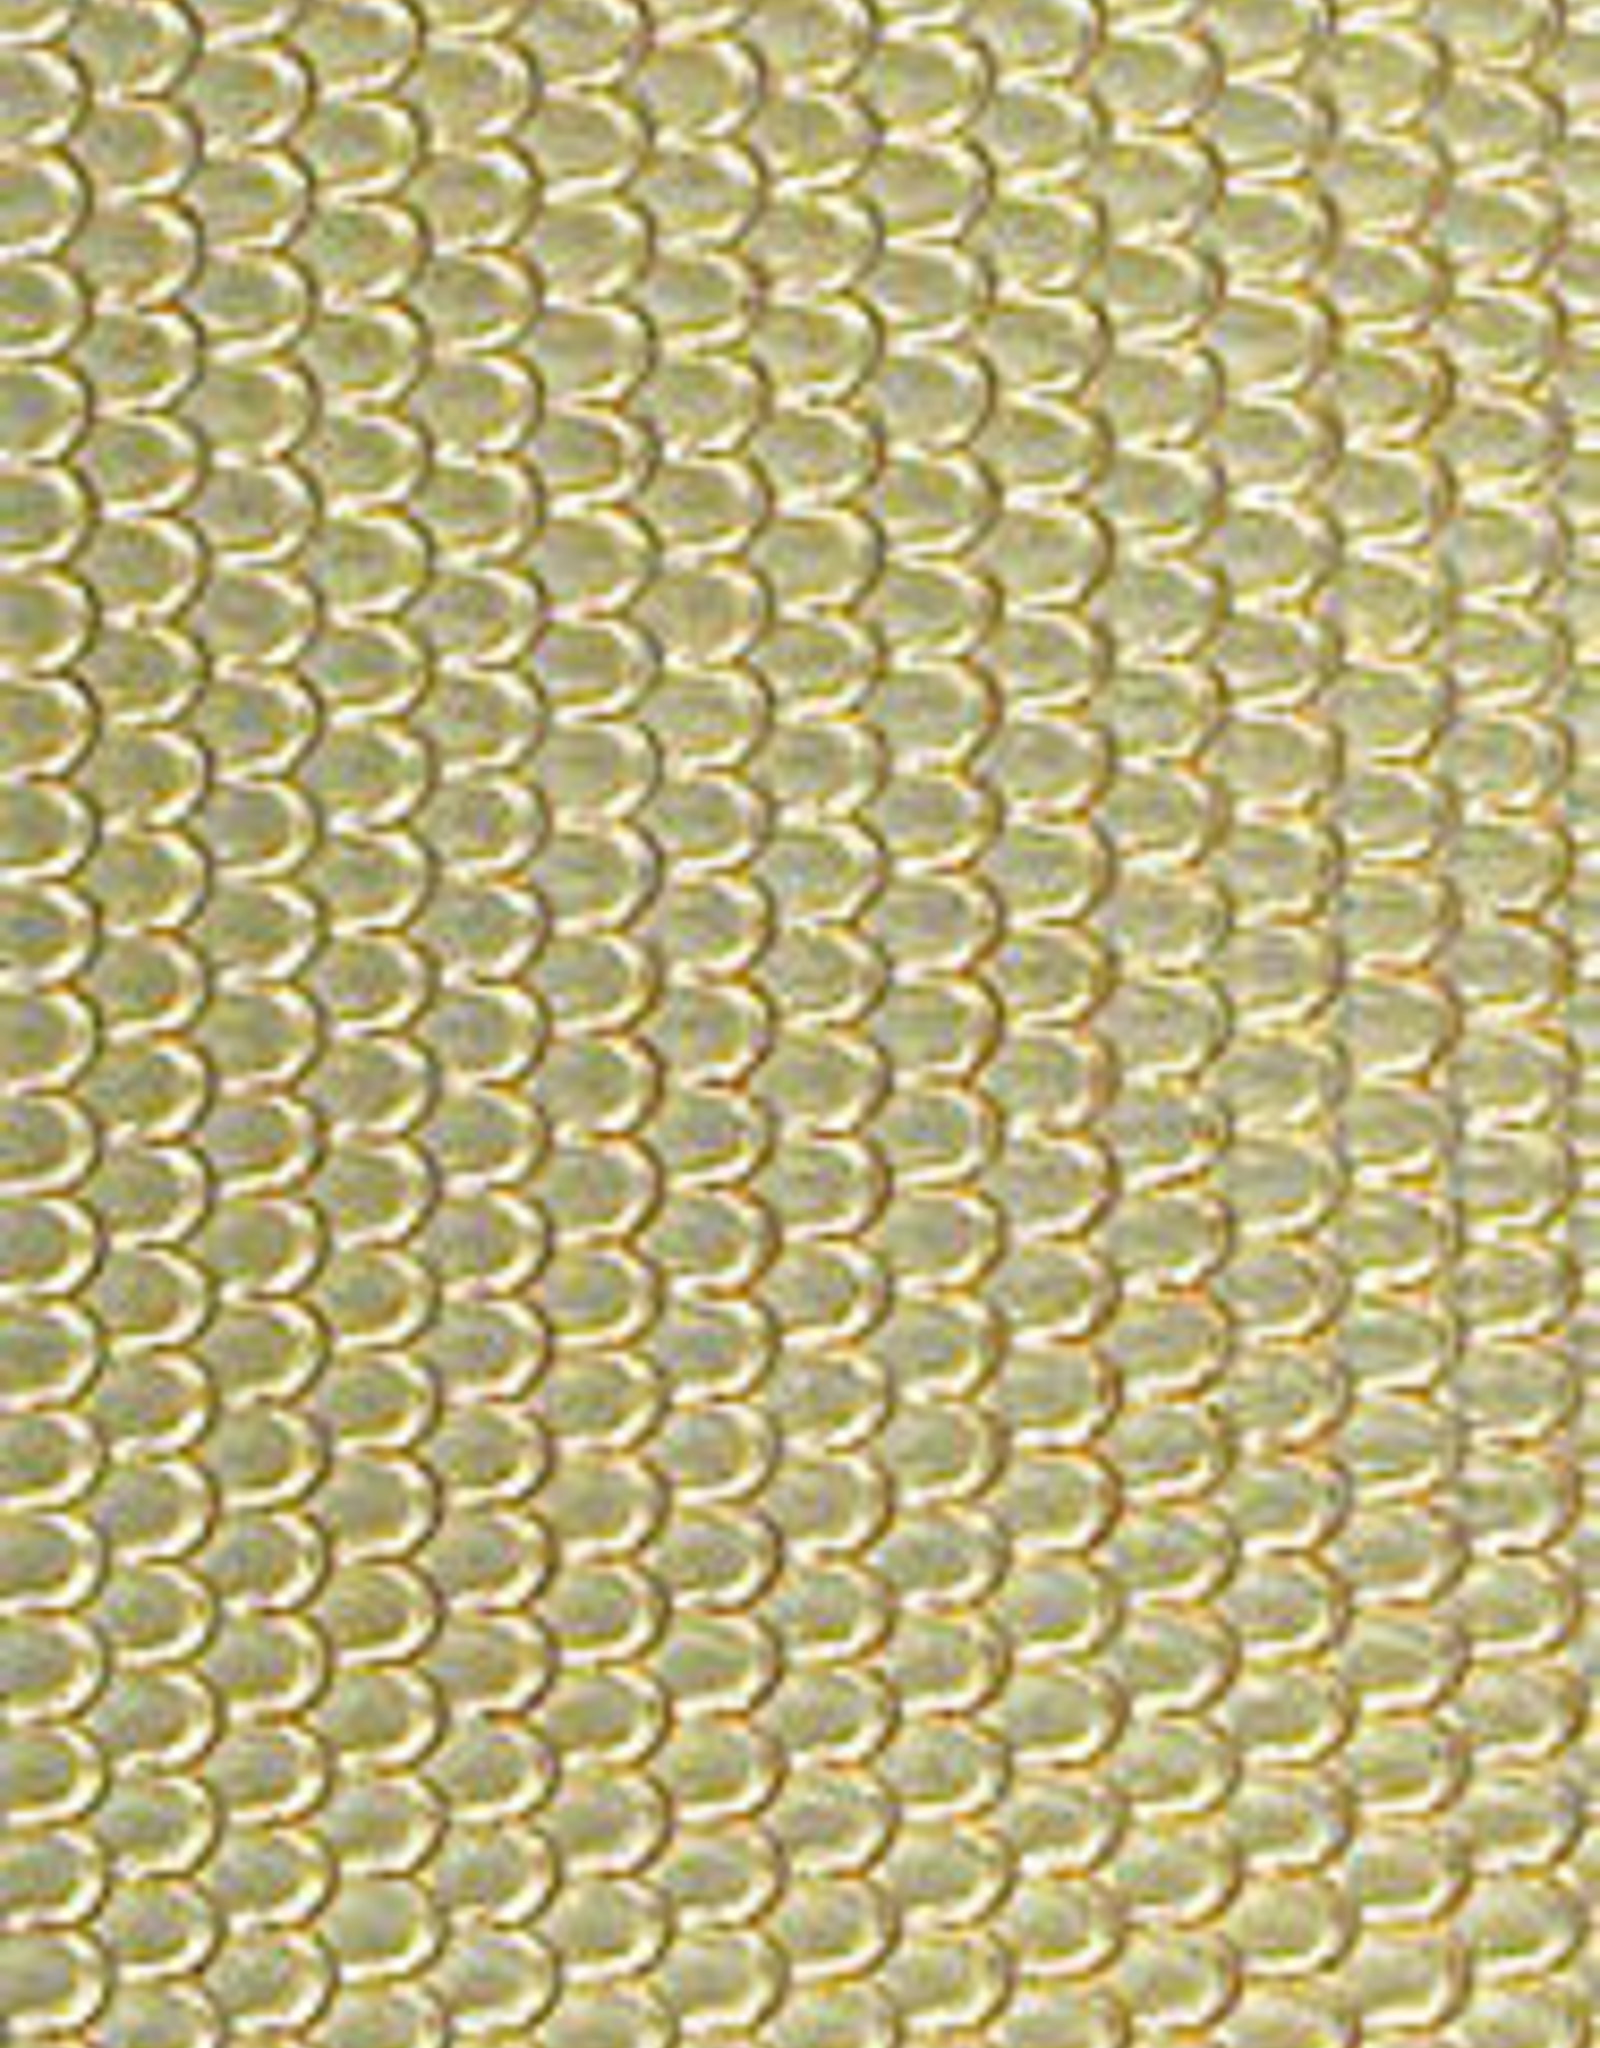 Metaliferrous Brass Texture Plate BR4256